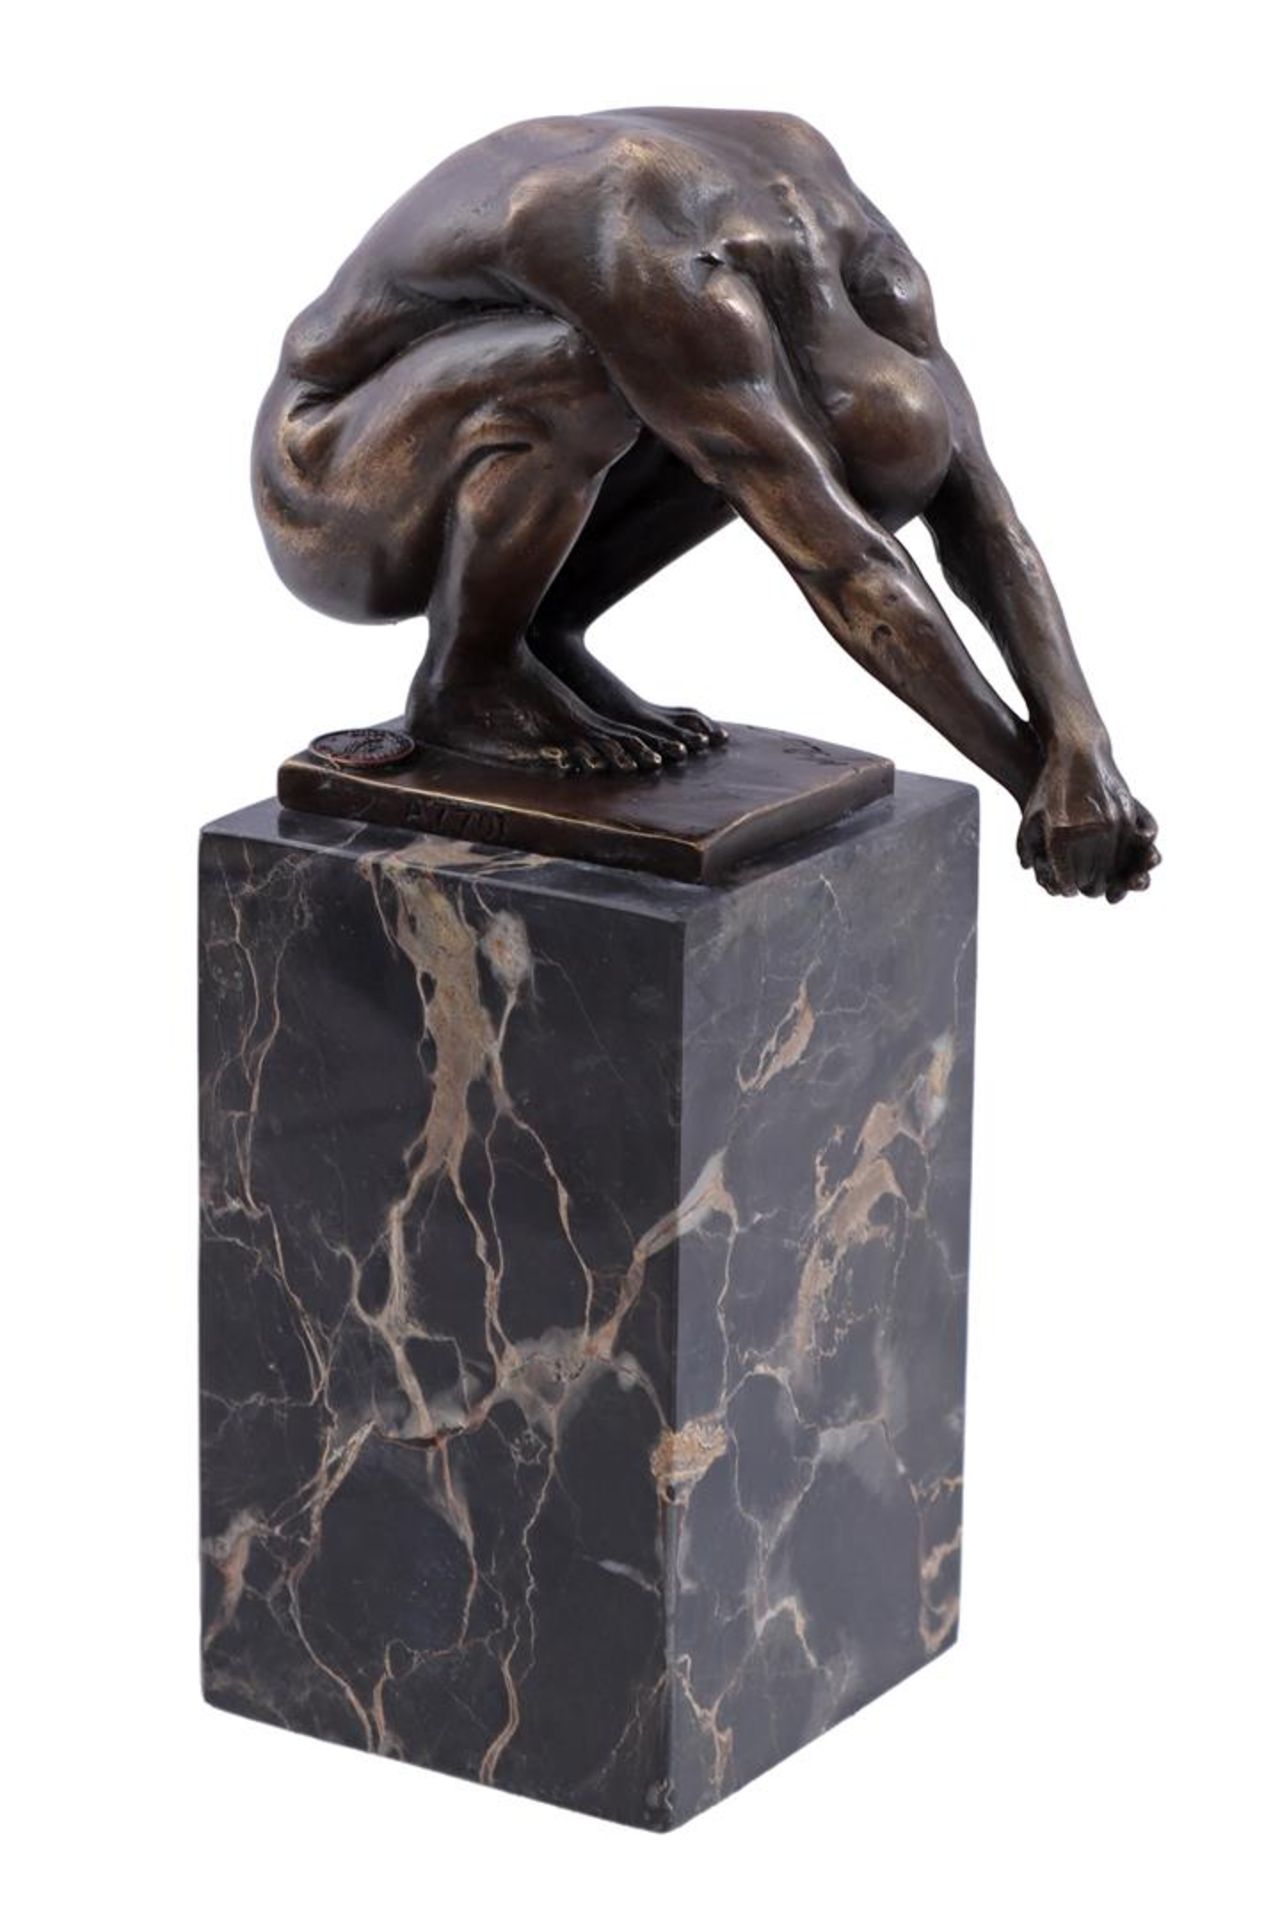 Bronze statue